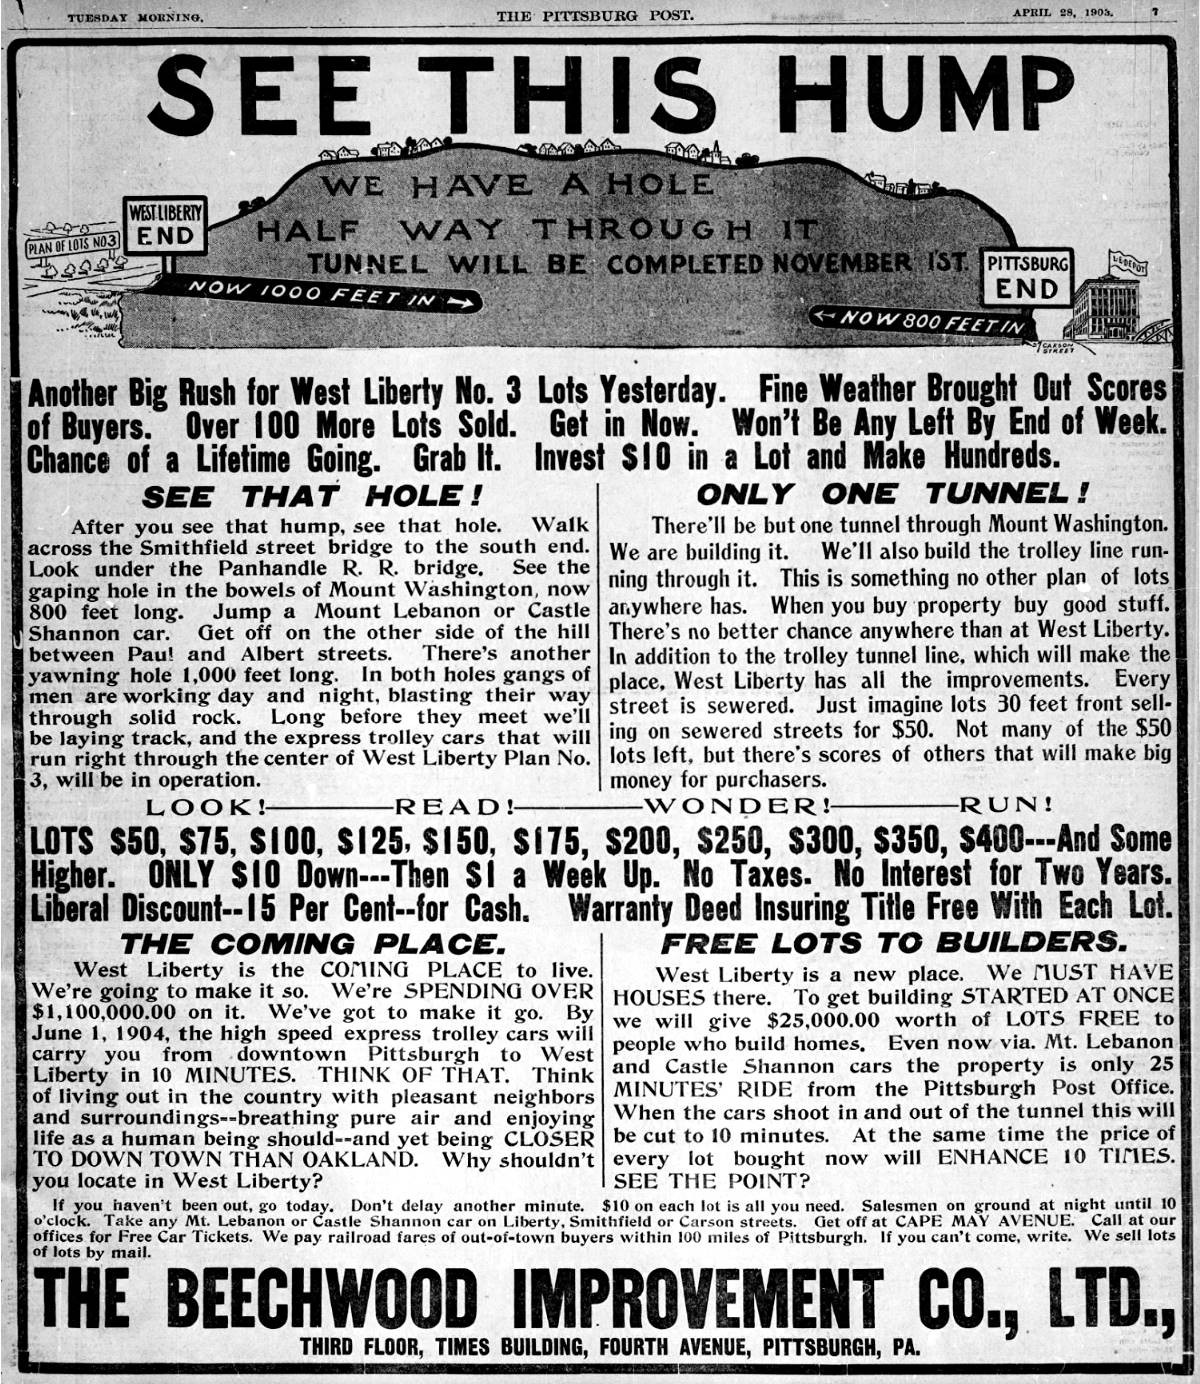 Beechwood Improvement Company Ad - April 28, 1903.